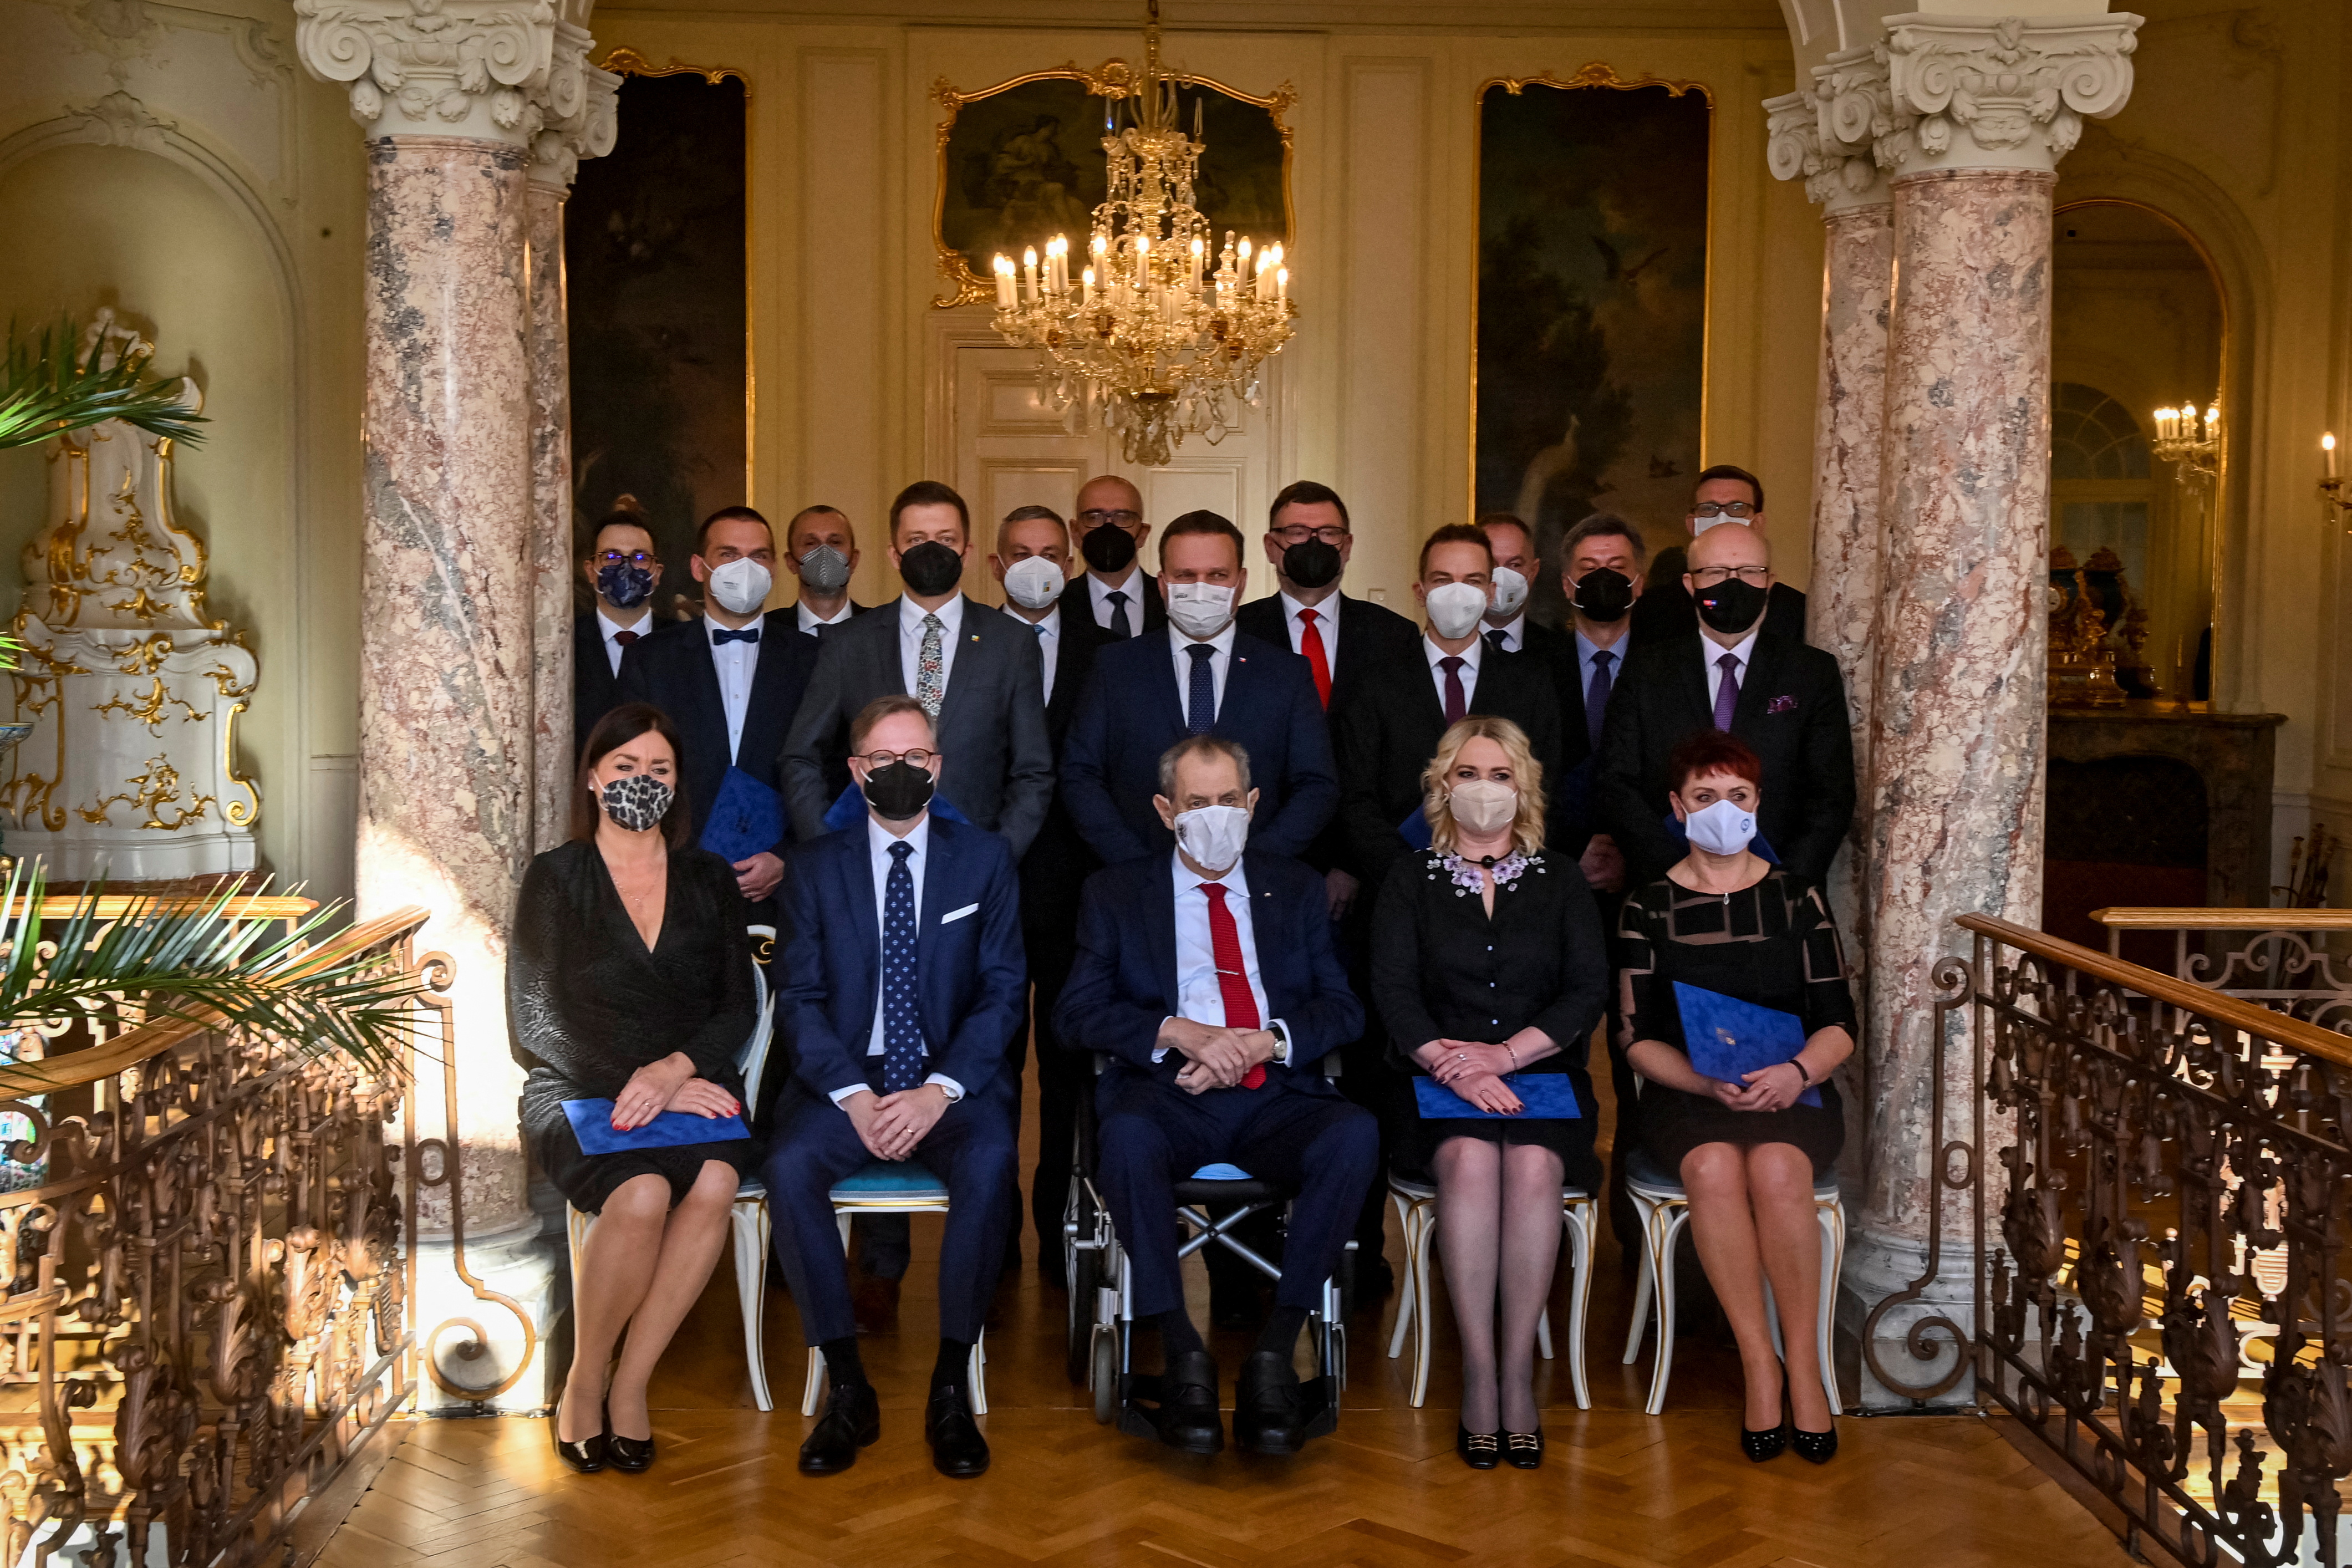 Czech President Milos Zeman appoints new Czech cabinet, at the Lany Chateau